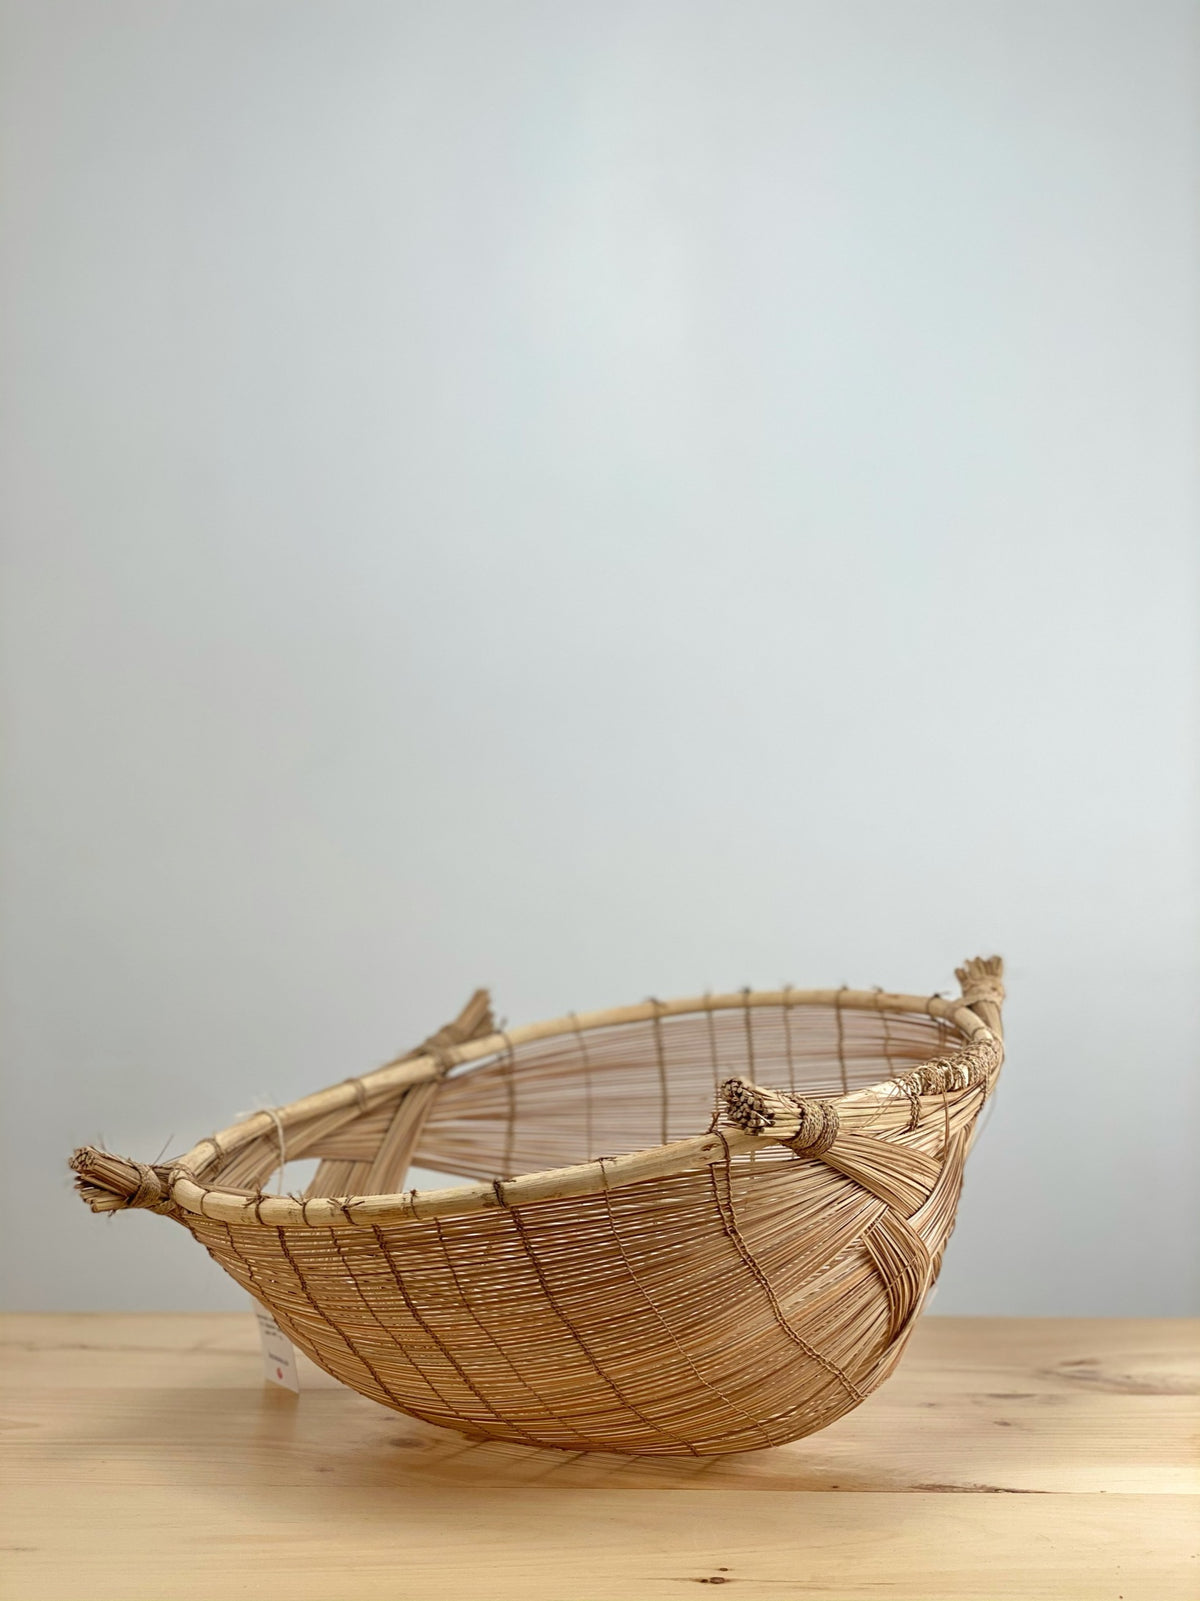 Traditional Fishing Basket by Mehinako